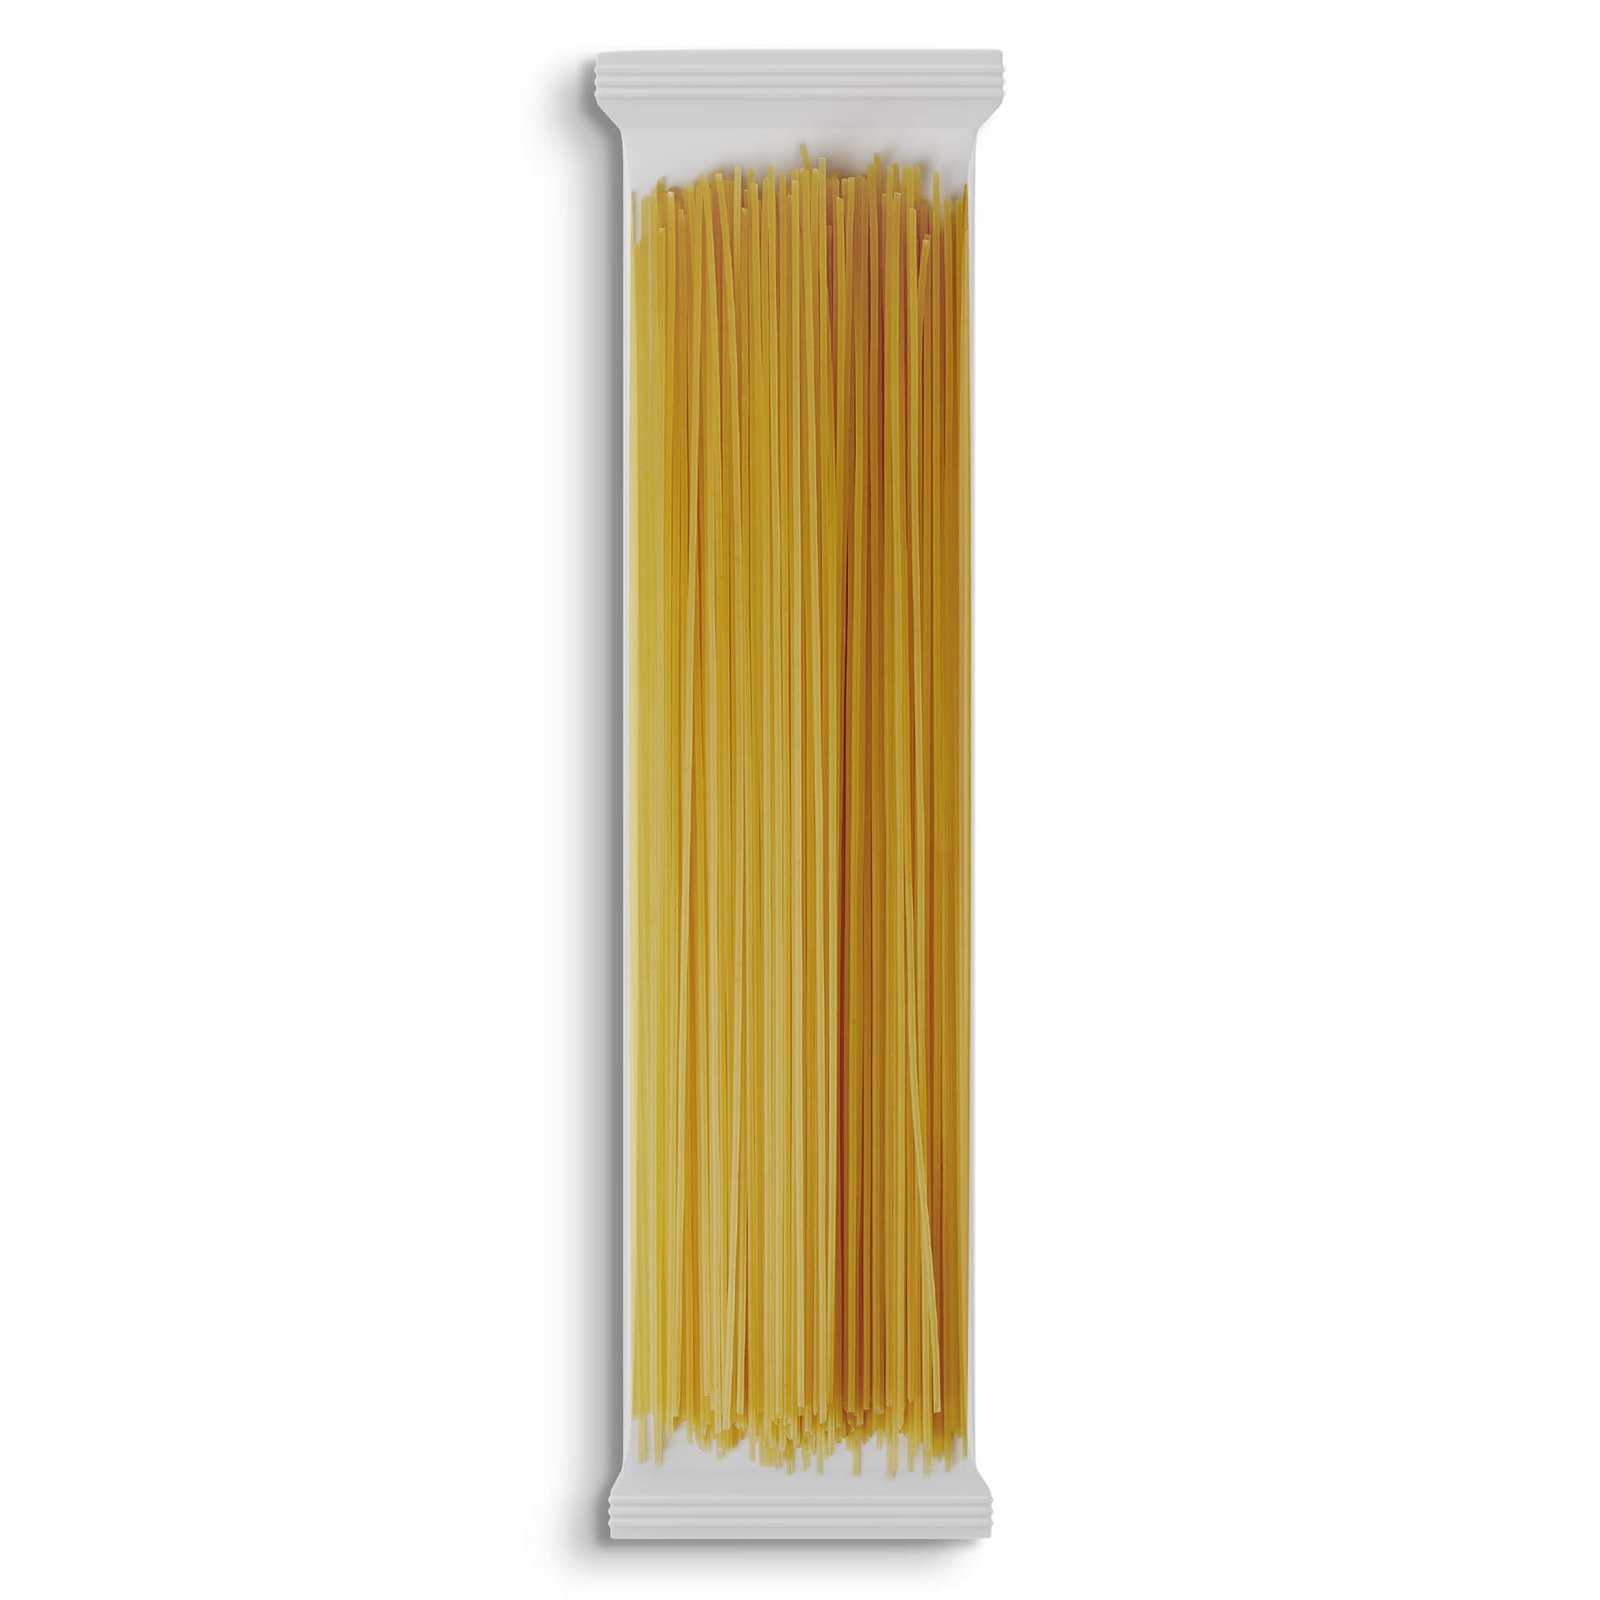 Blank Free Pasta Packaging Mockup PSD Template